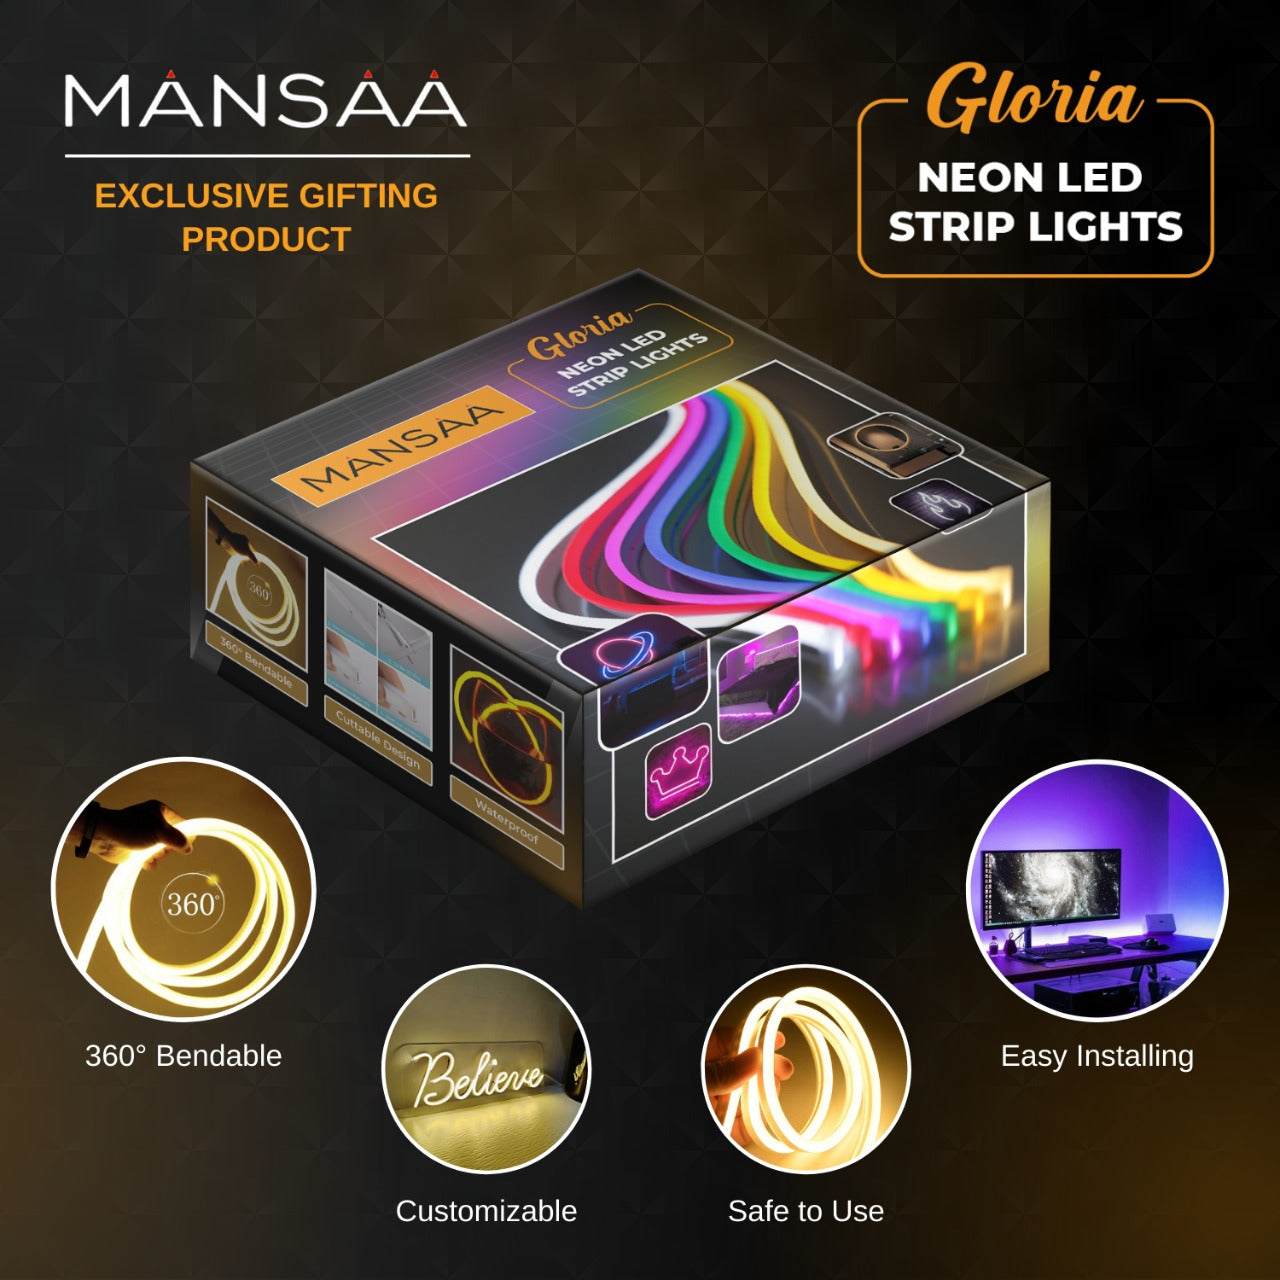 GLORIA Neon LED Strip Lights